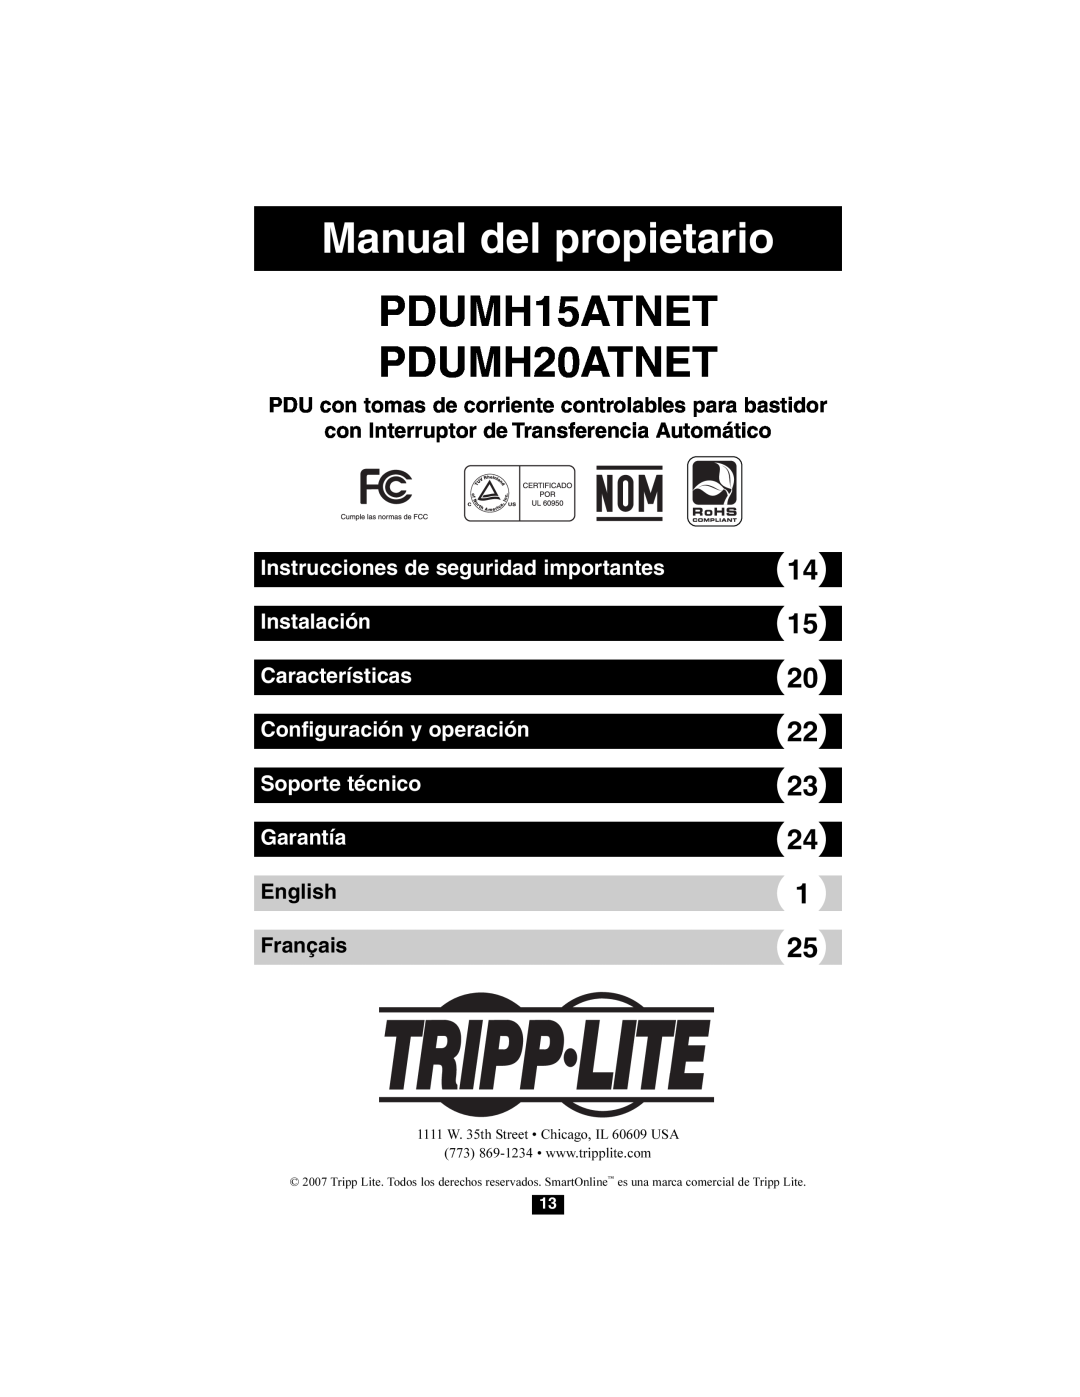 Tripp Lite PDUMH15ATNET Manual del propietario, PDU con tomas de corriente controlables para bastidor, English Français 